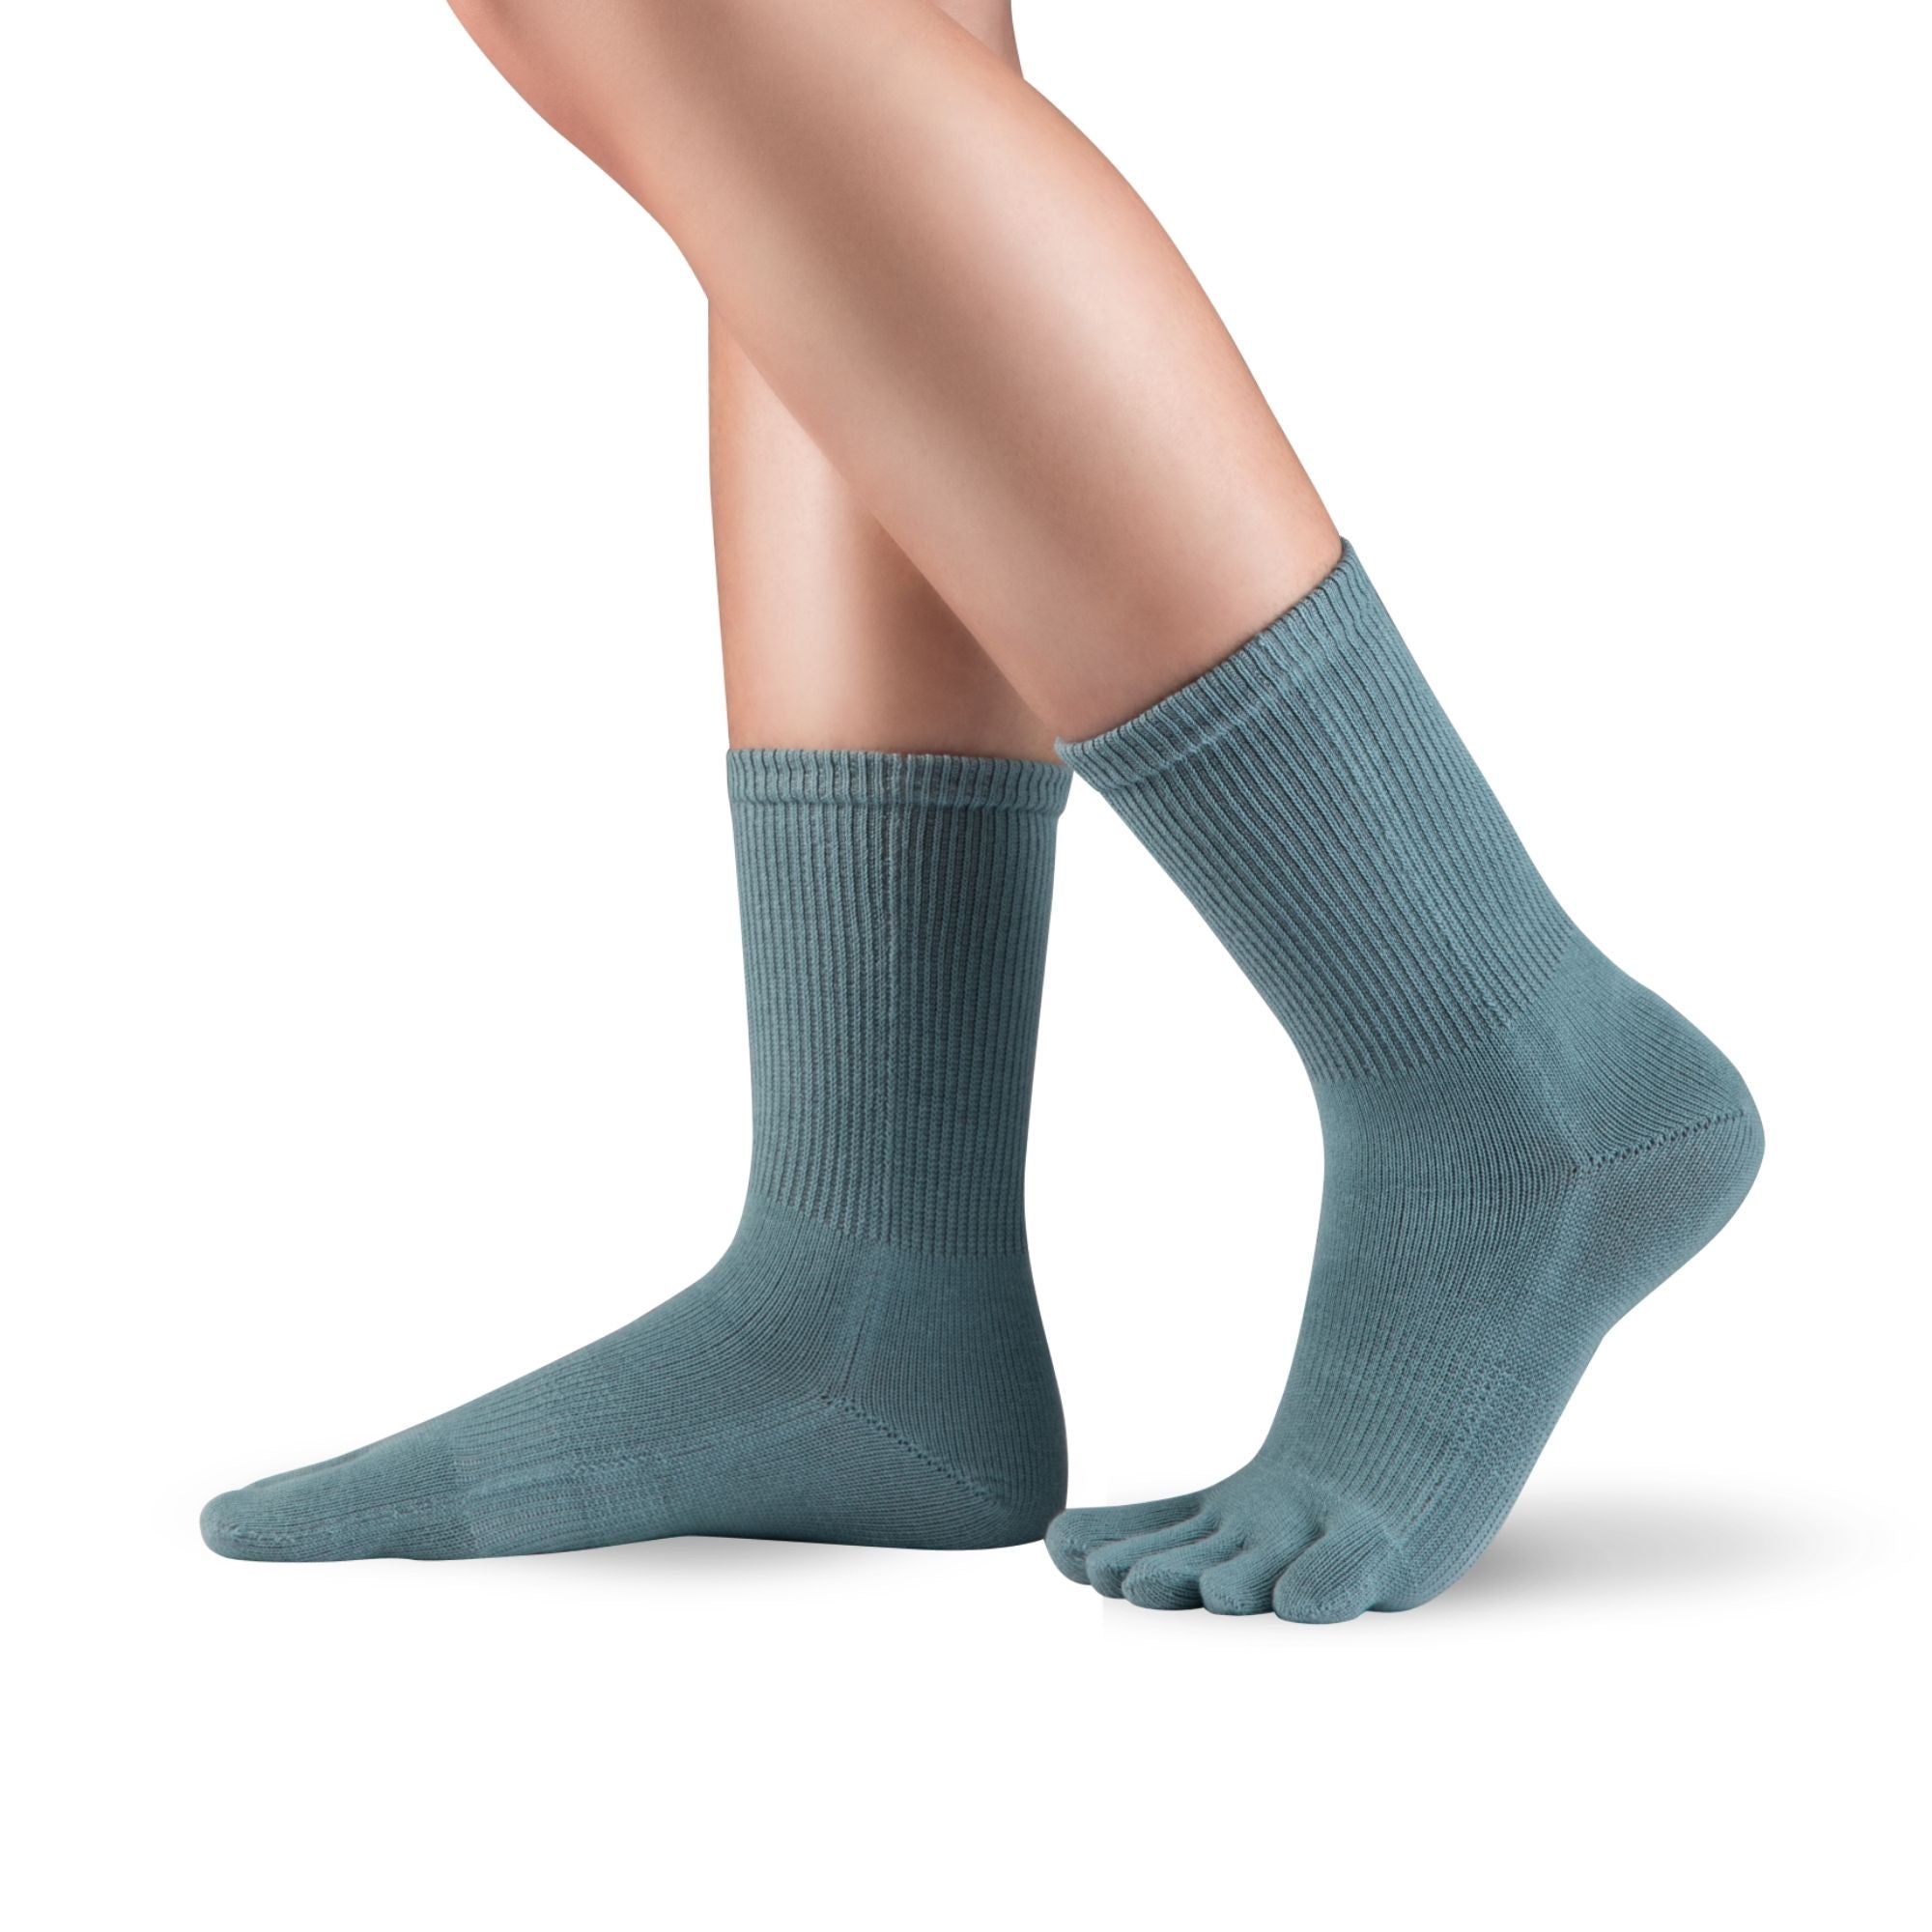 Knitido Dr. Foot Bunion Toe socks mid-calf, color gray-blue